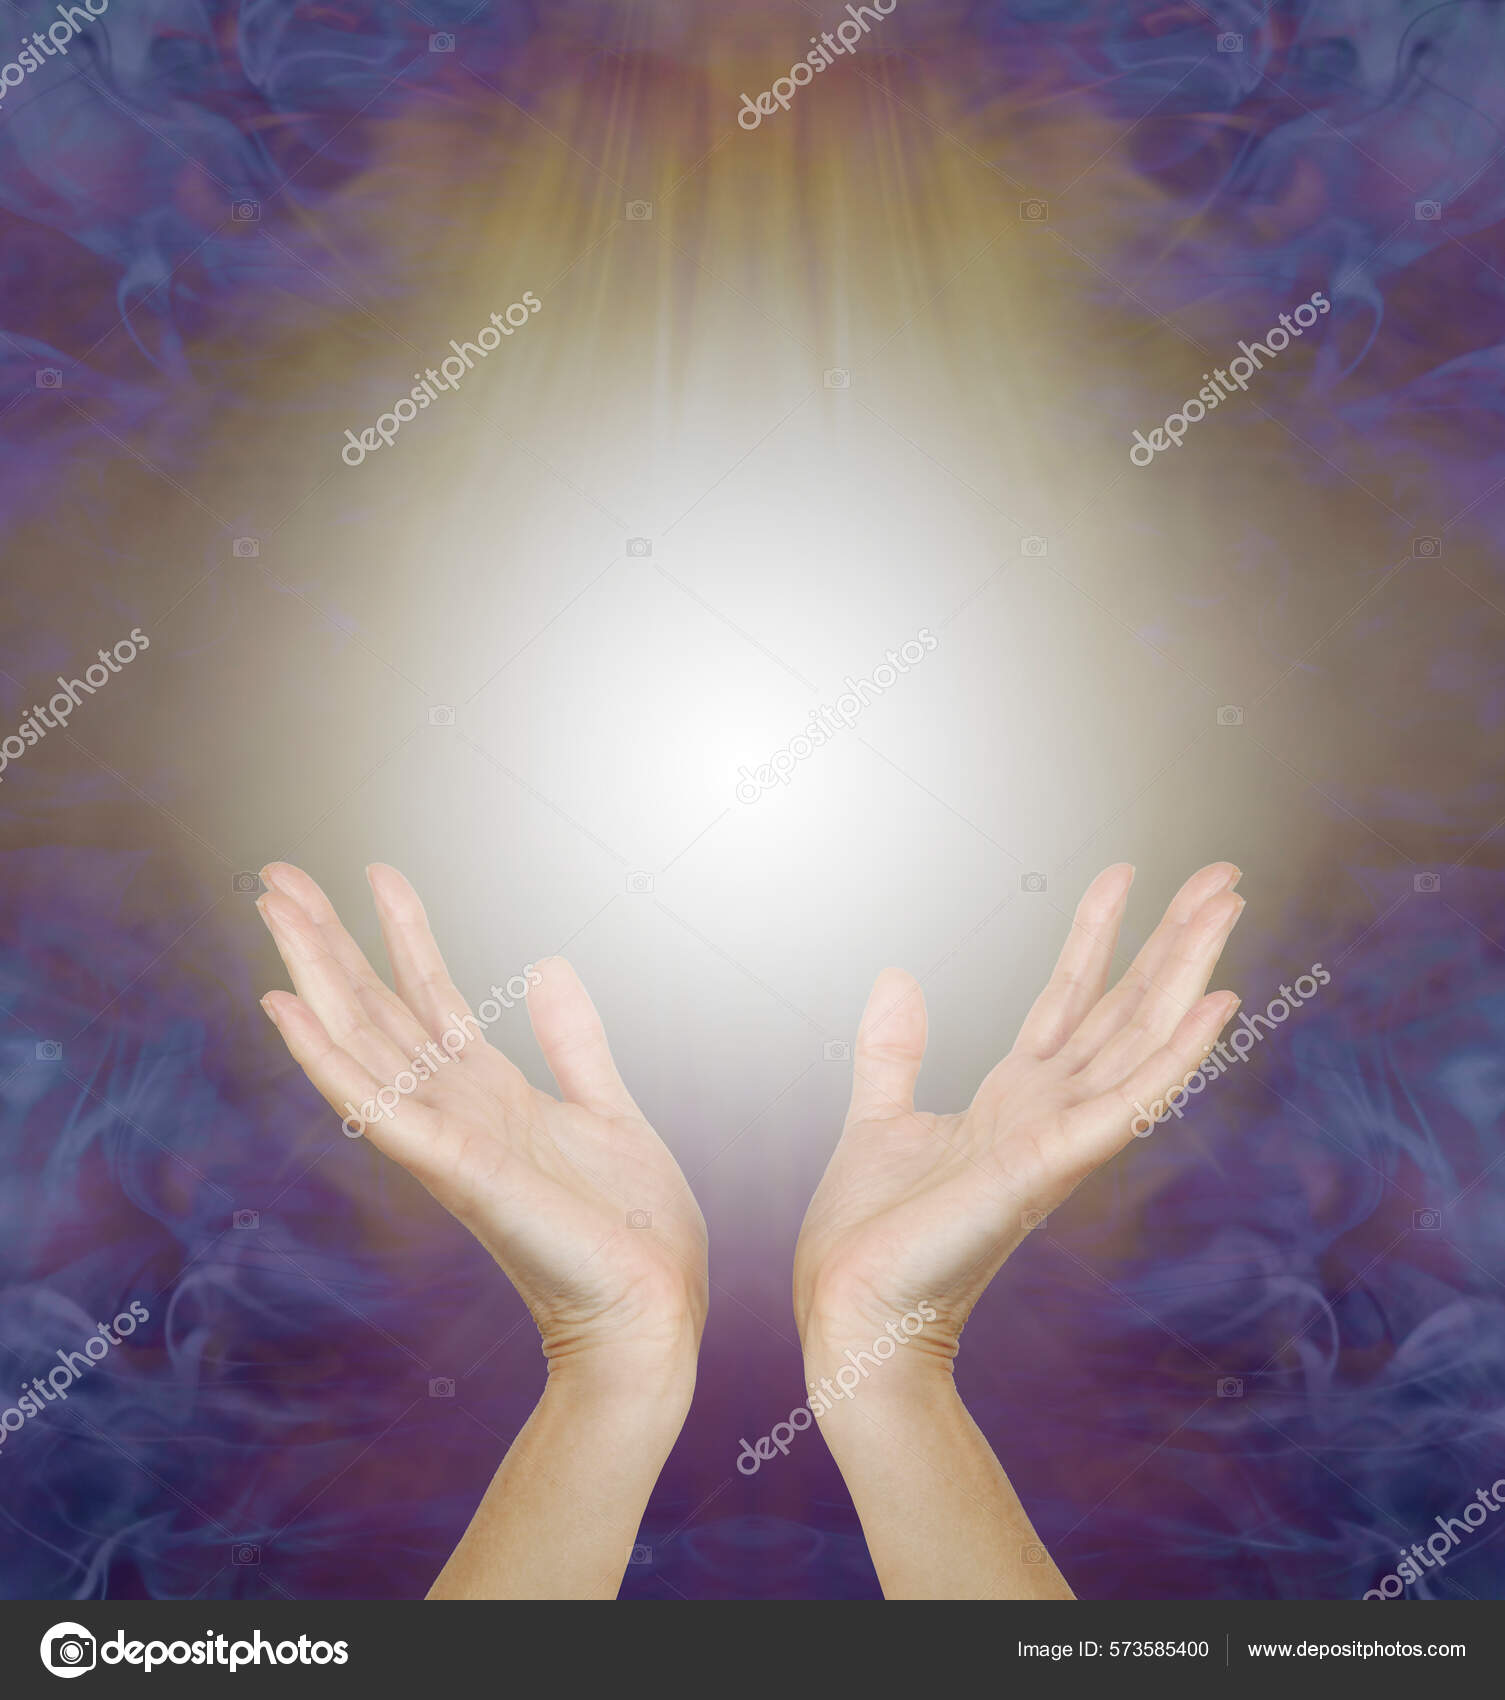 Healing Touch Hands Light Message Background Female Hands Reaching